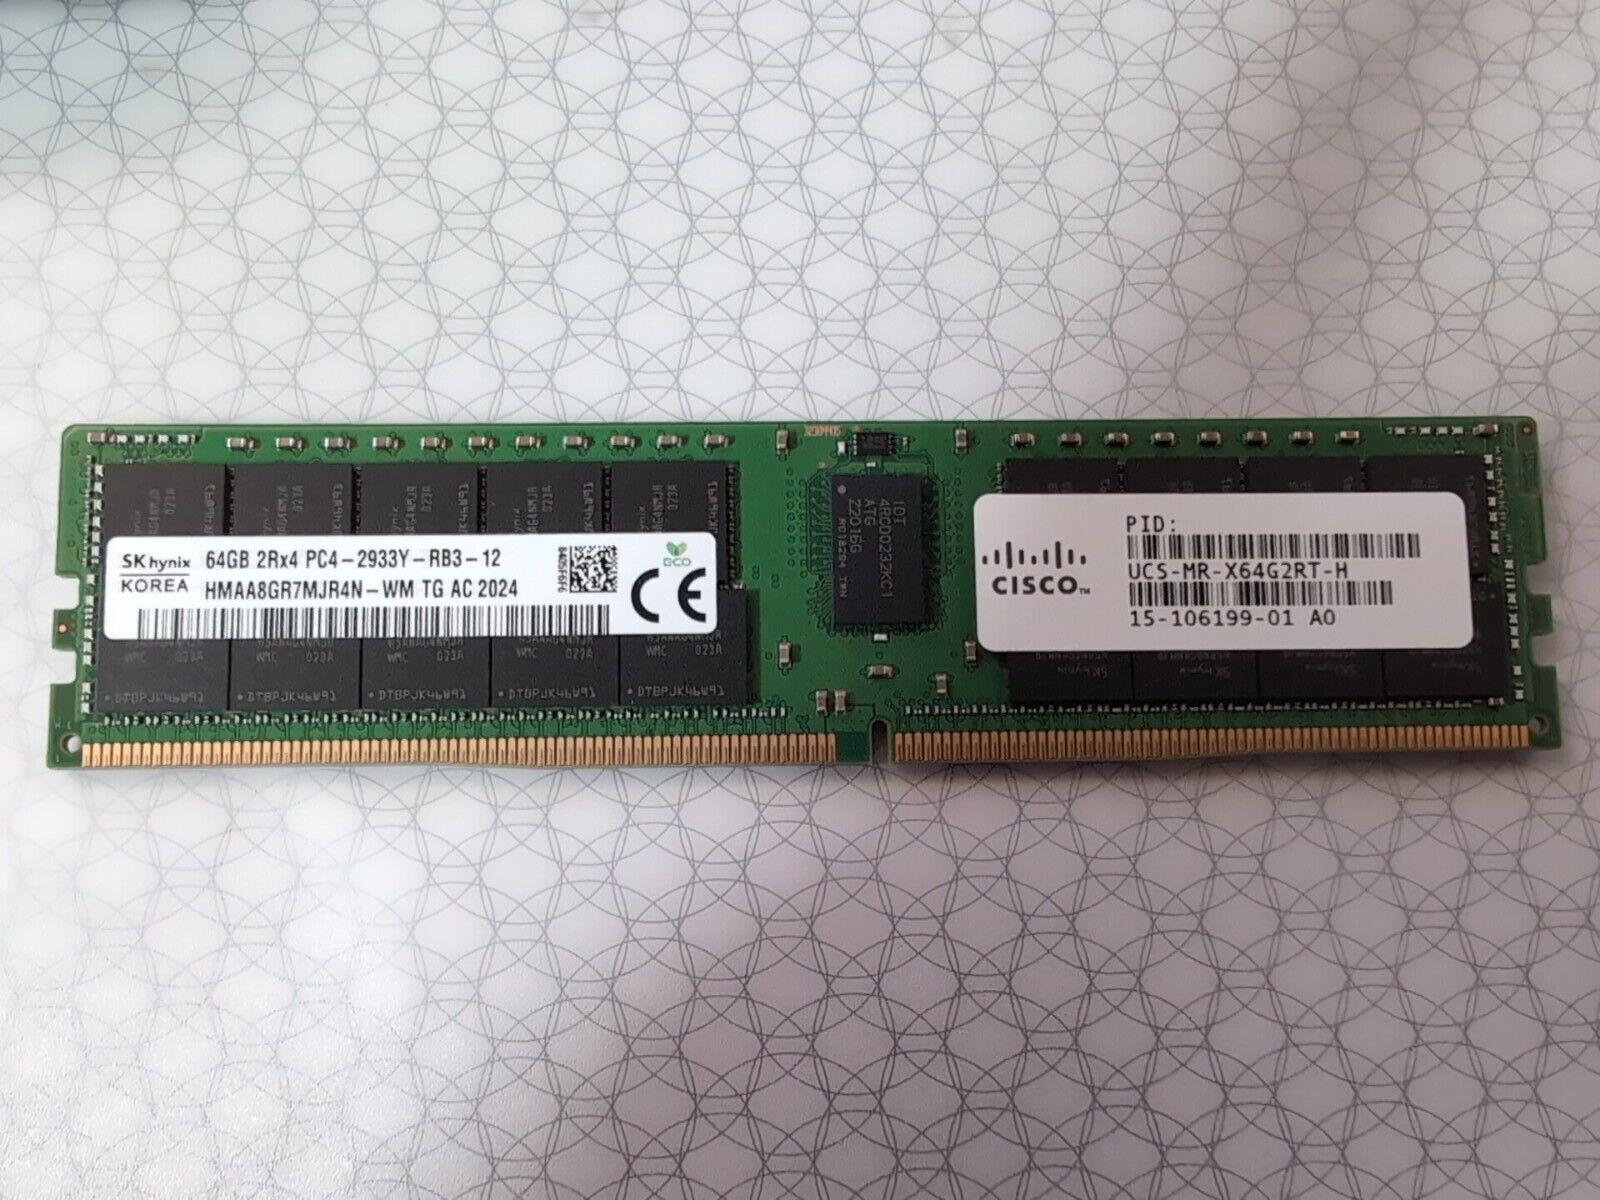 64 GB Cisco UCS-MR-X64G2RT-H 64GB PC4-23400 (DDR4-2933) RDIMM Memory RAM